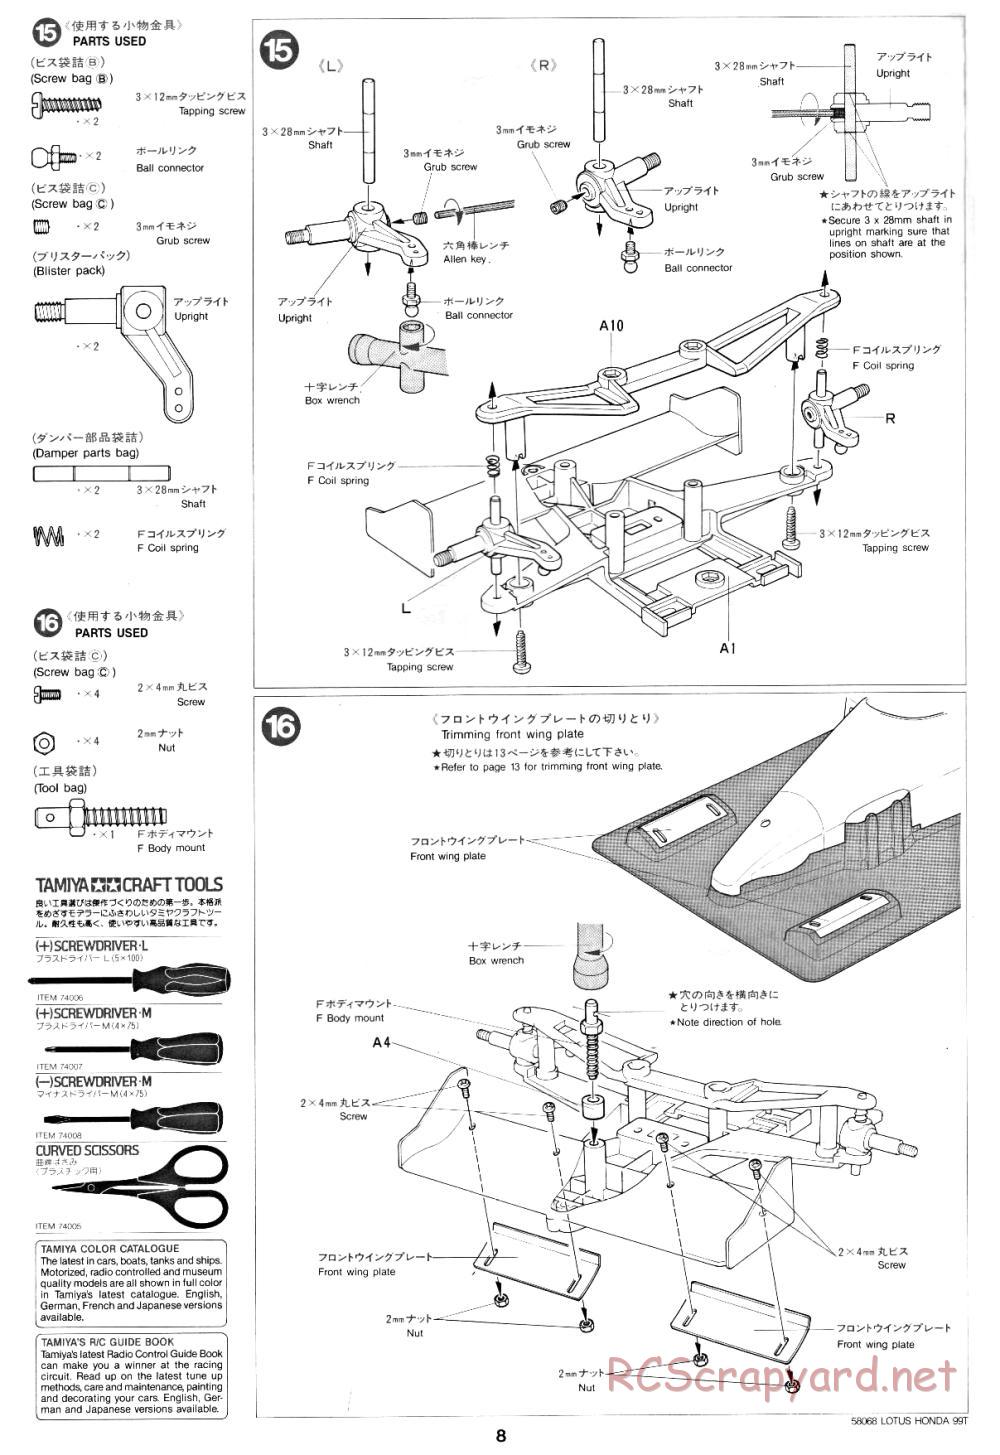 Tamiya - Lotus Honda 99T - 58068 - Manual - Page 8